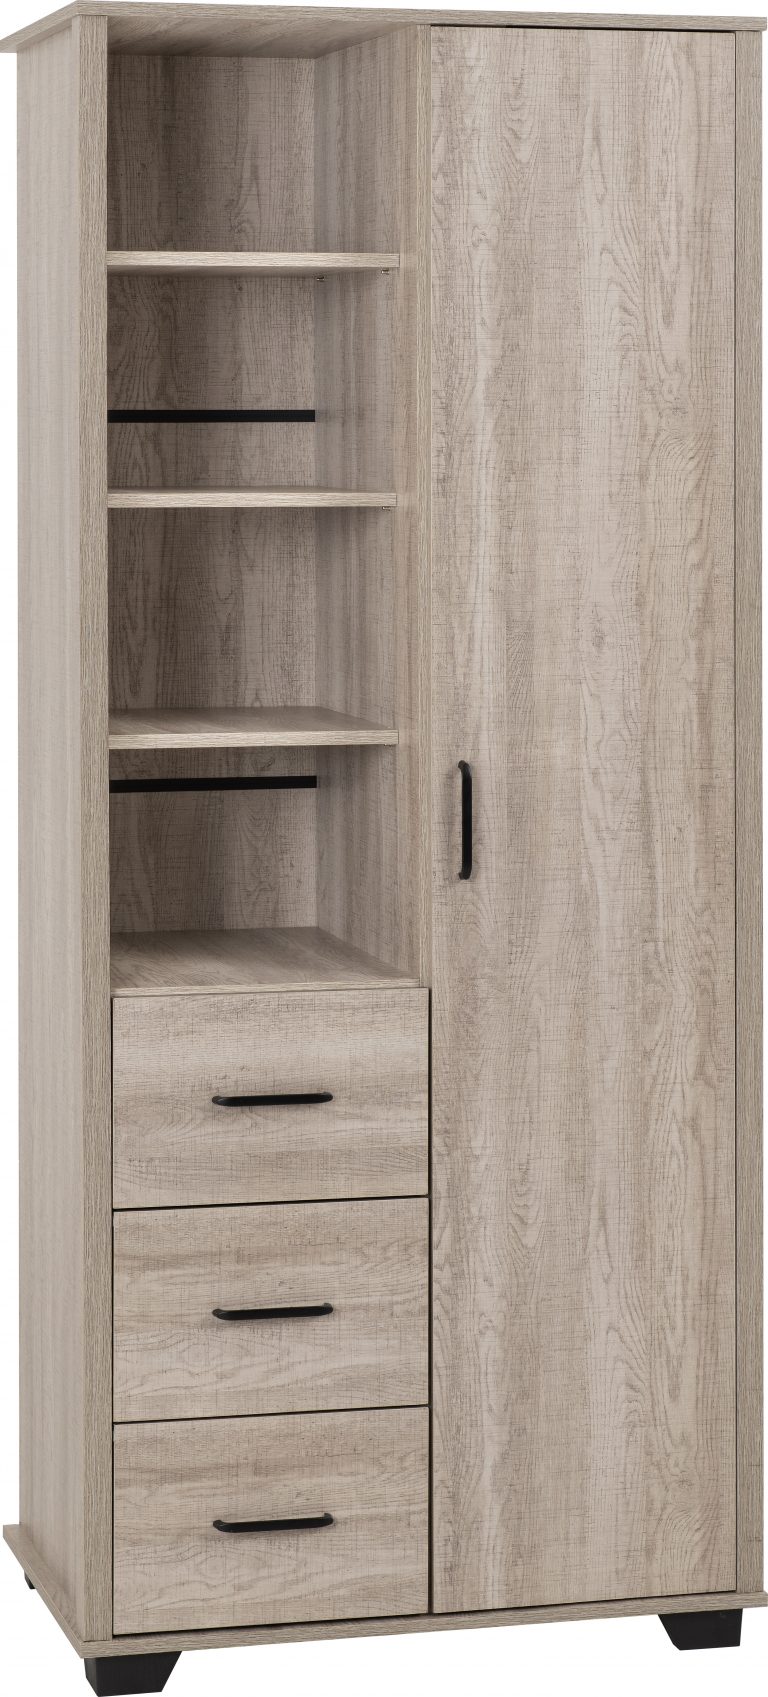 Oliver 1 Door 3 Drawer Open Shelf Wardrobe - Light Oak Effect